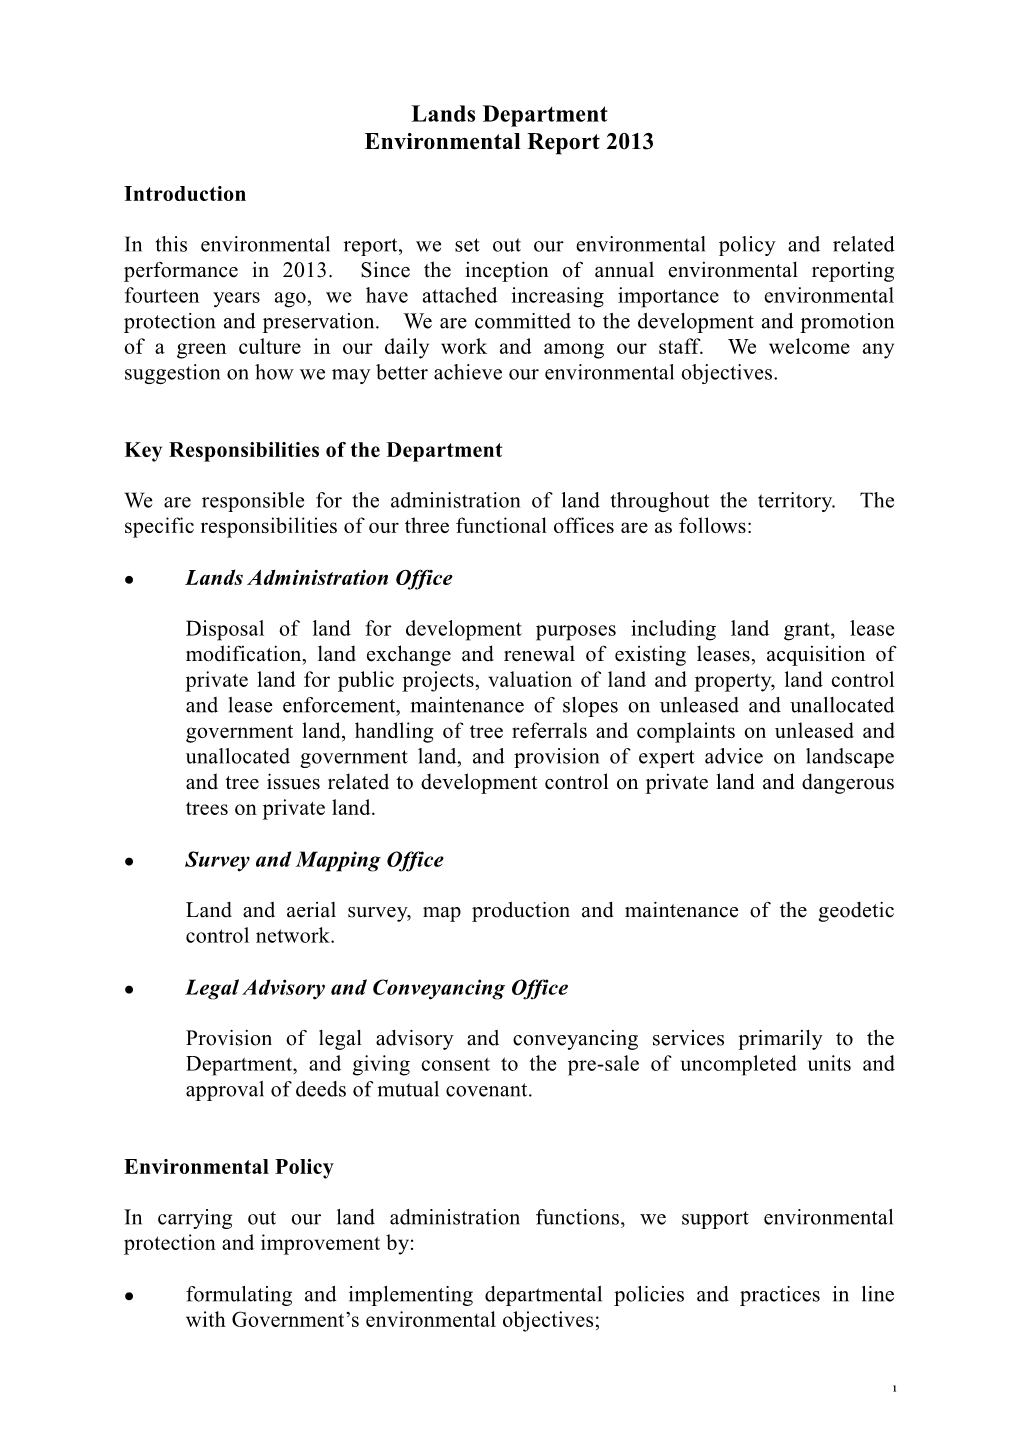 Lands Department Environmental Report 2013